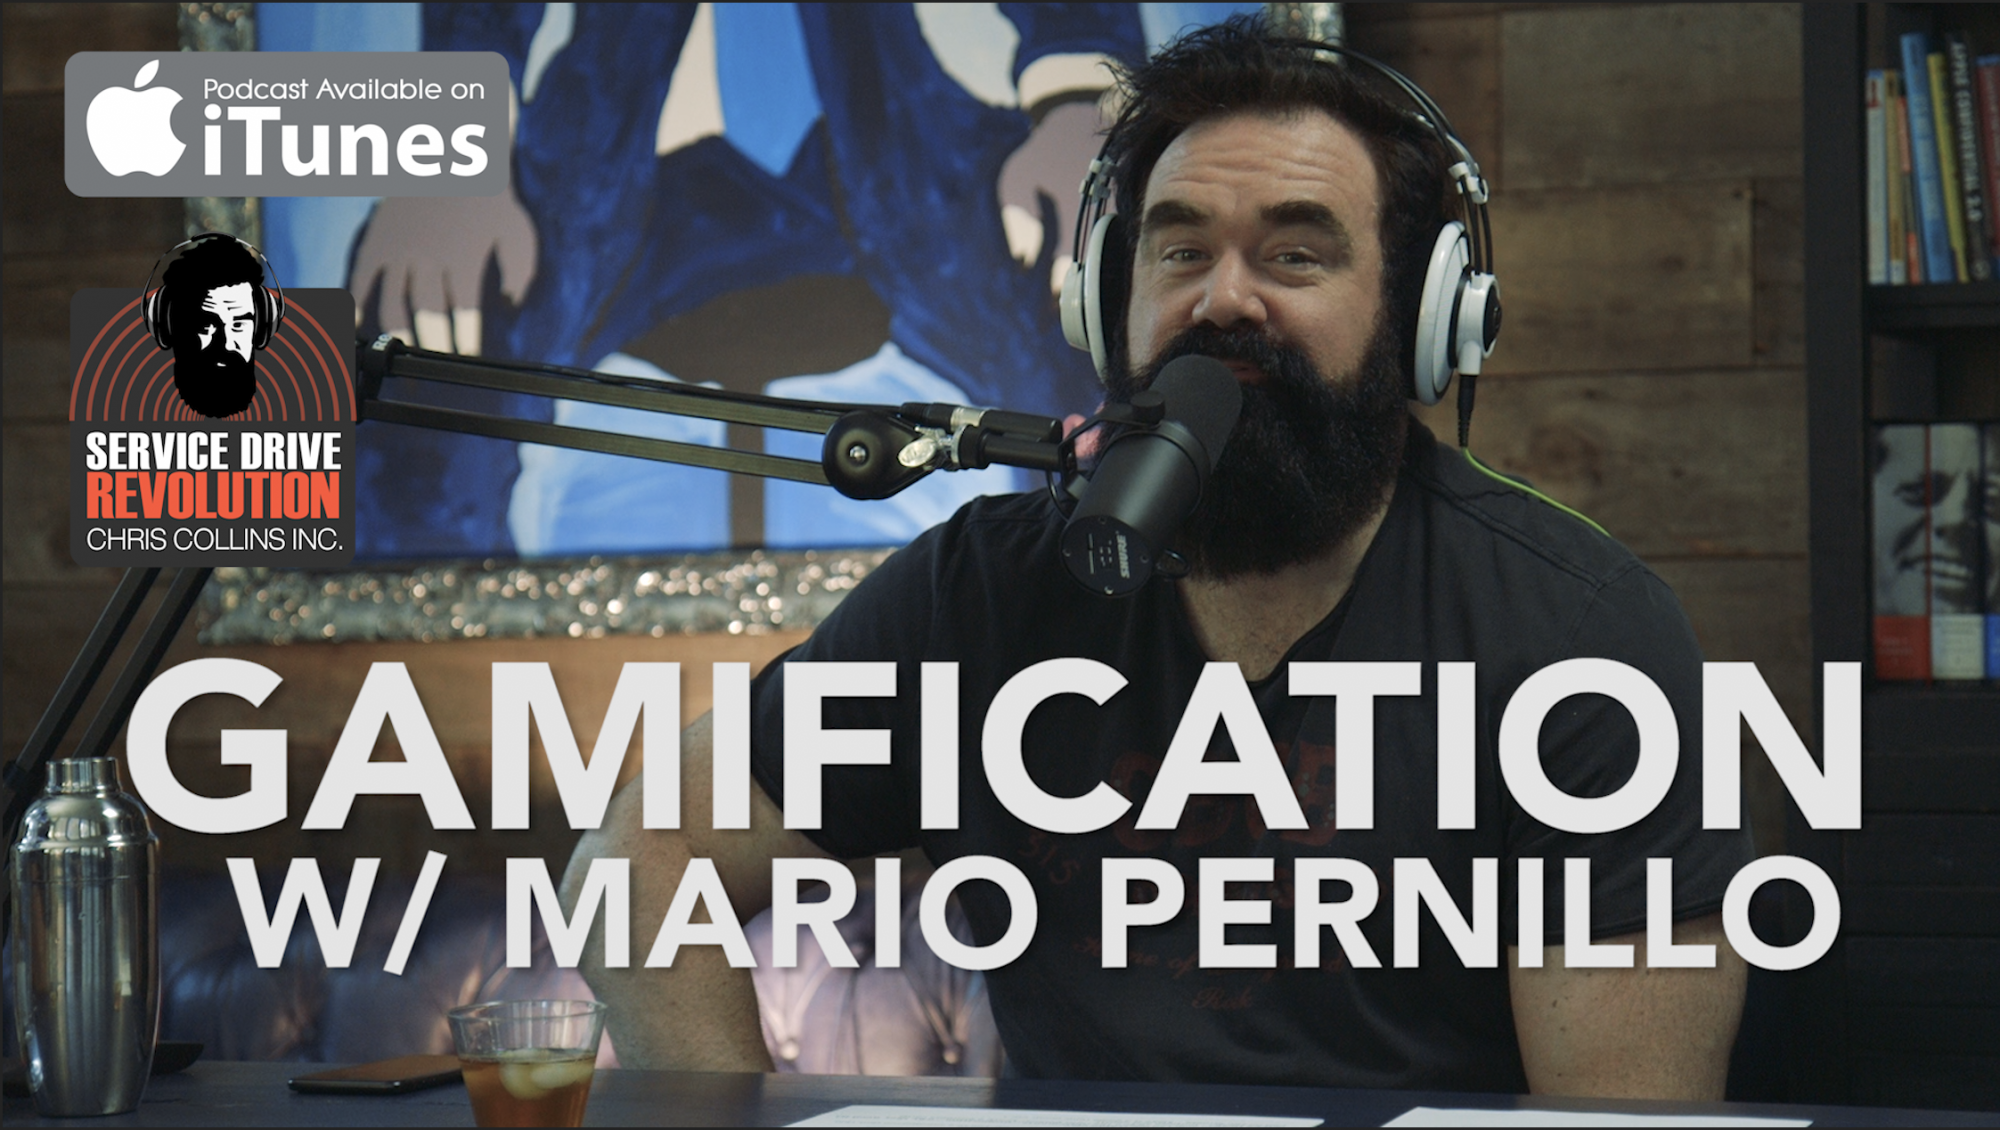 Gamification with Mario Pernillo